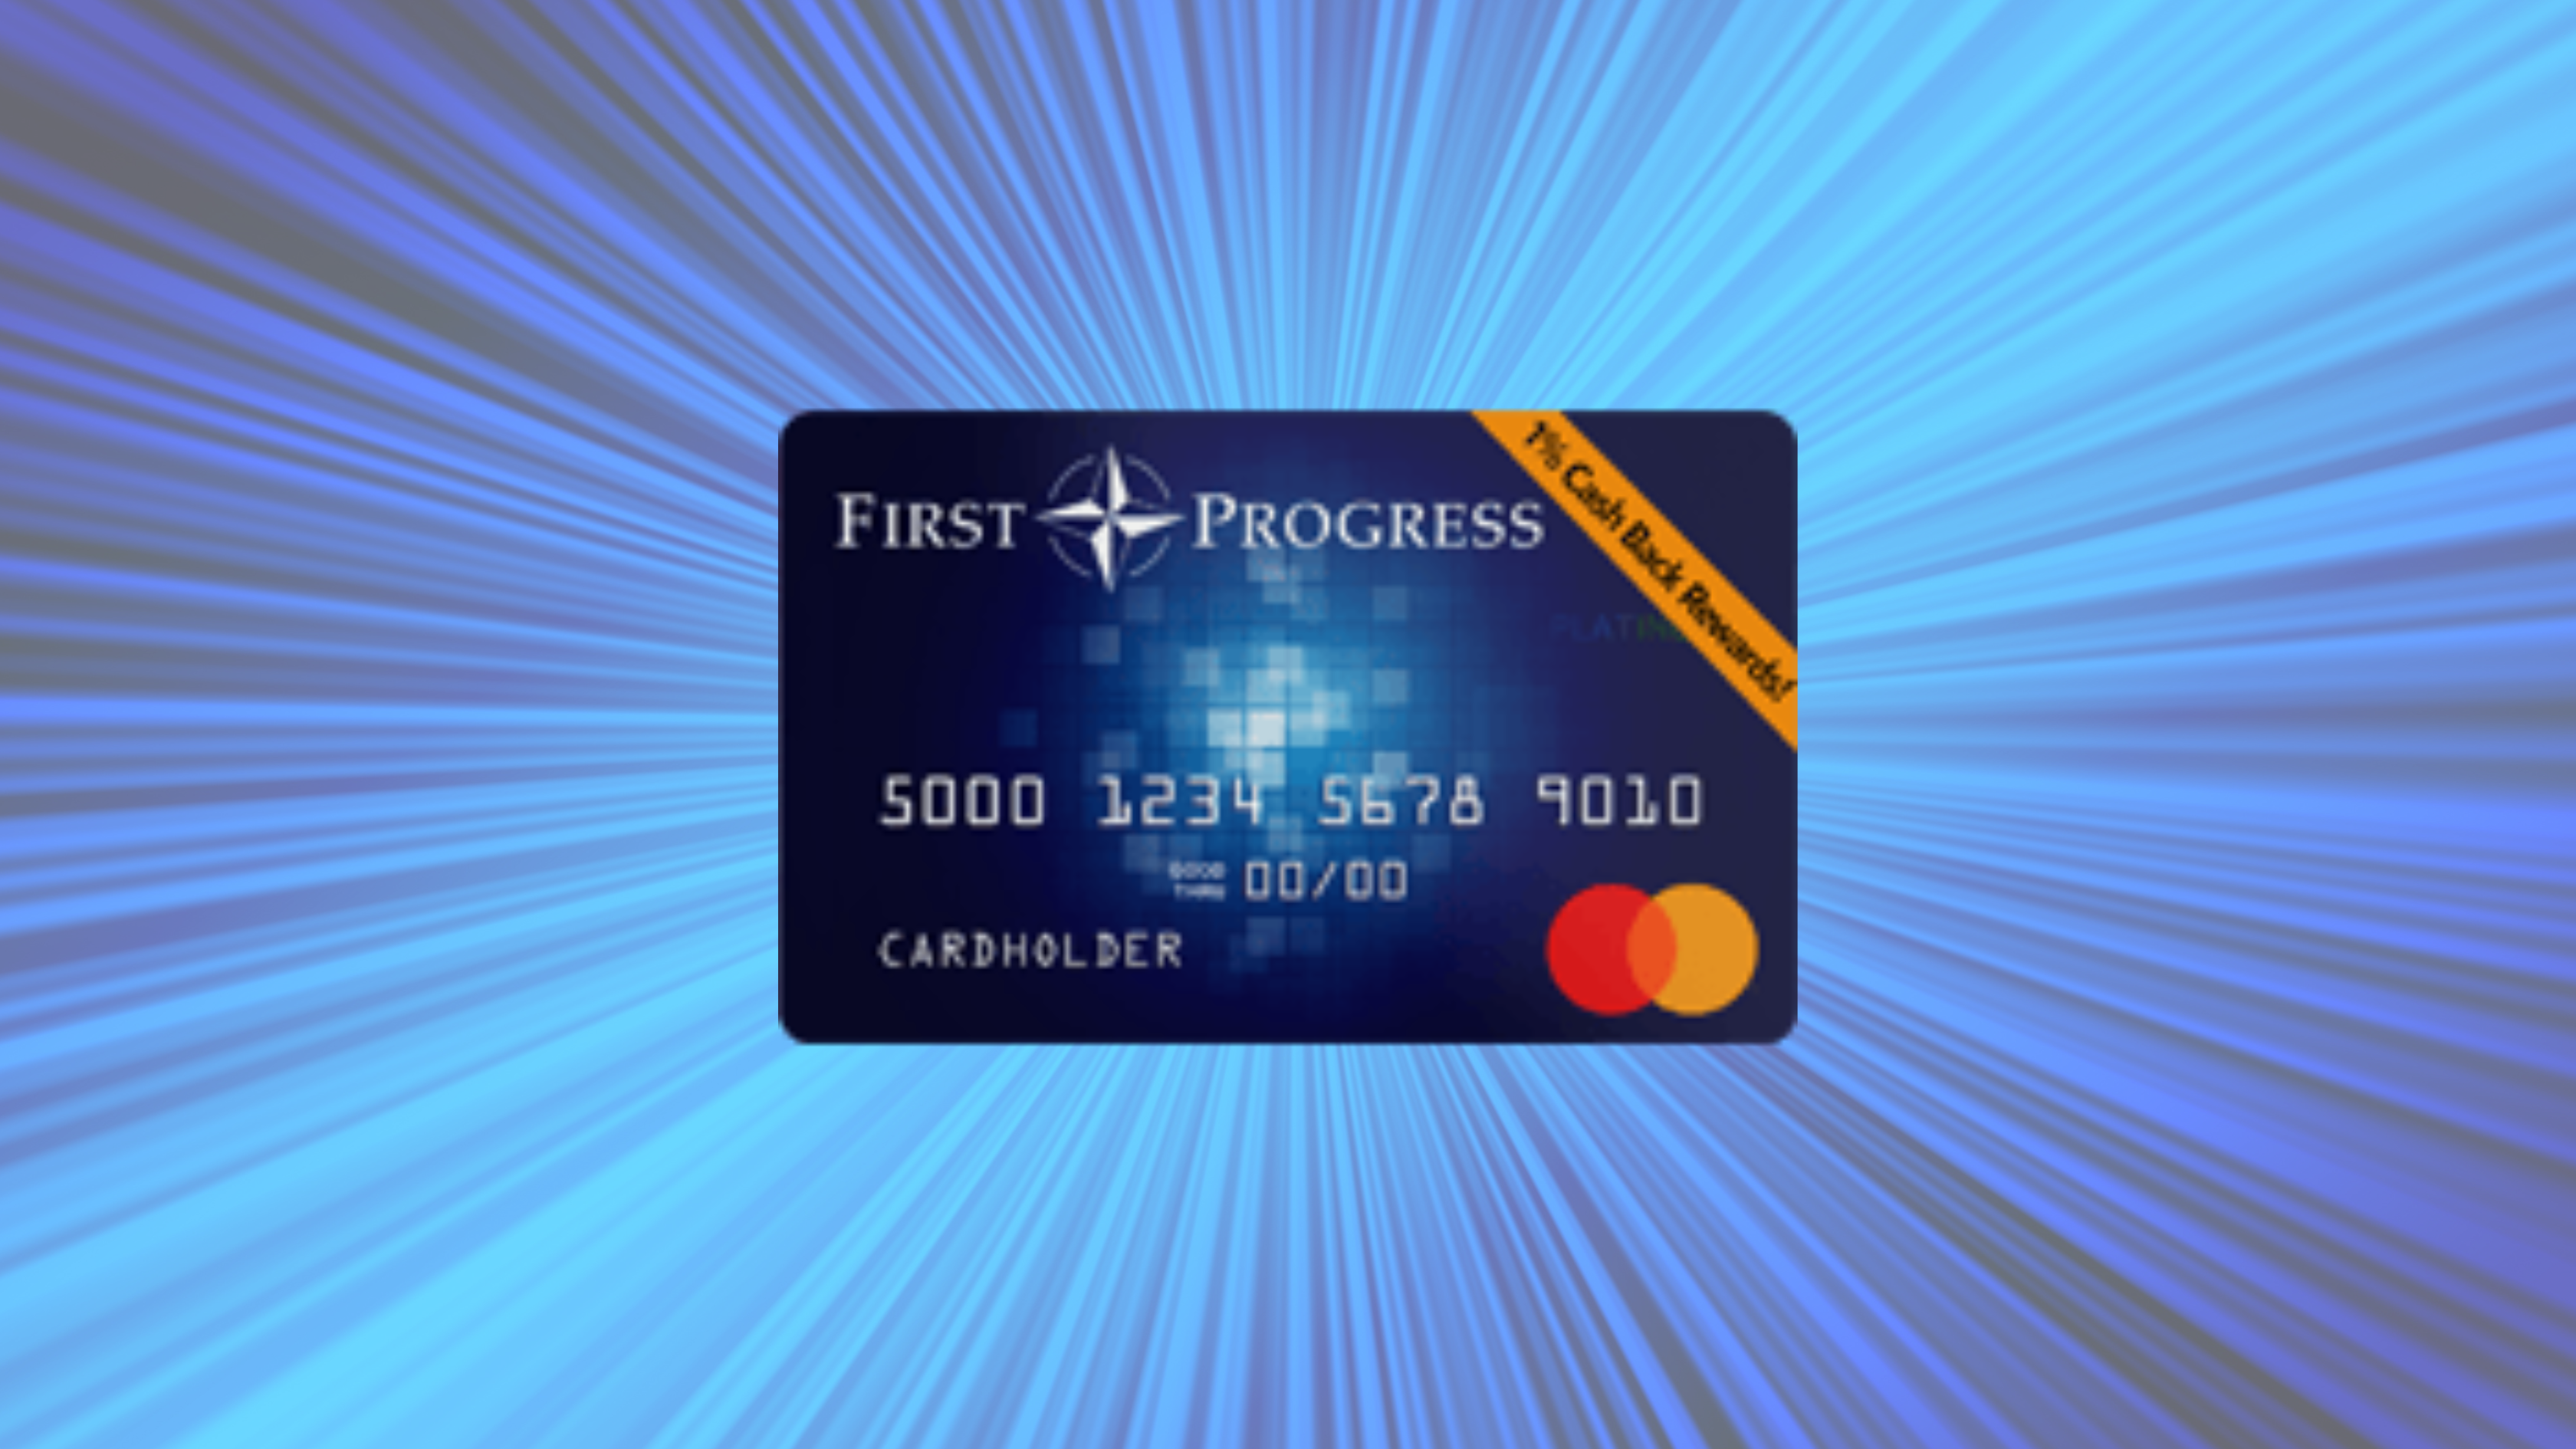 First Progress Platinum Prestige Mastercard® Secured credit card